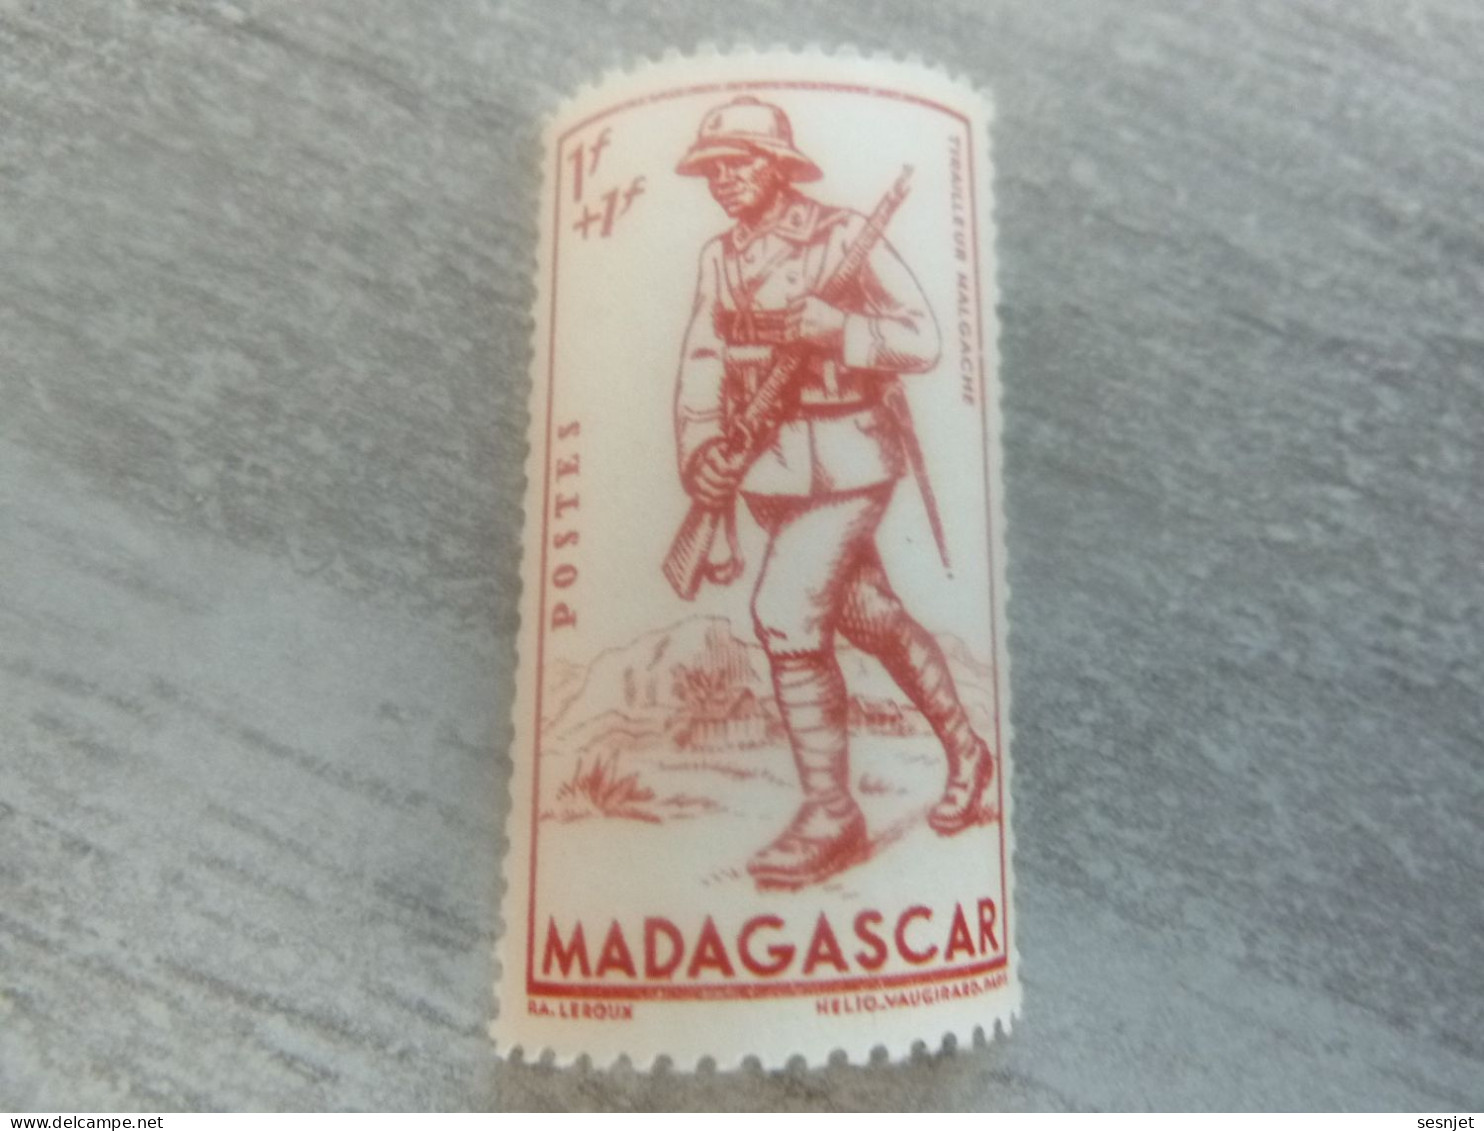 Madagascar - Tirailleur Malgache - 1f.+1f. - Yt 226 - Helio Vaugirard Paris - Rouge-orange - Neuf - Année 1941 - - Nuovi